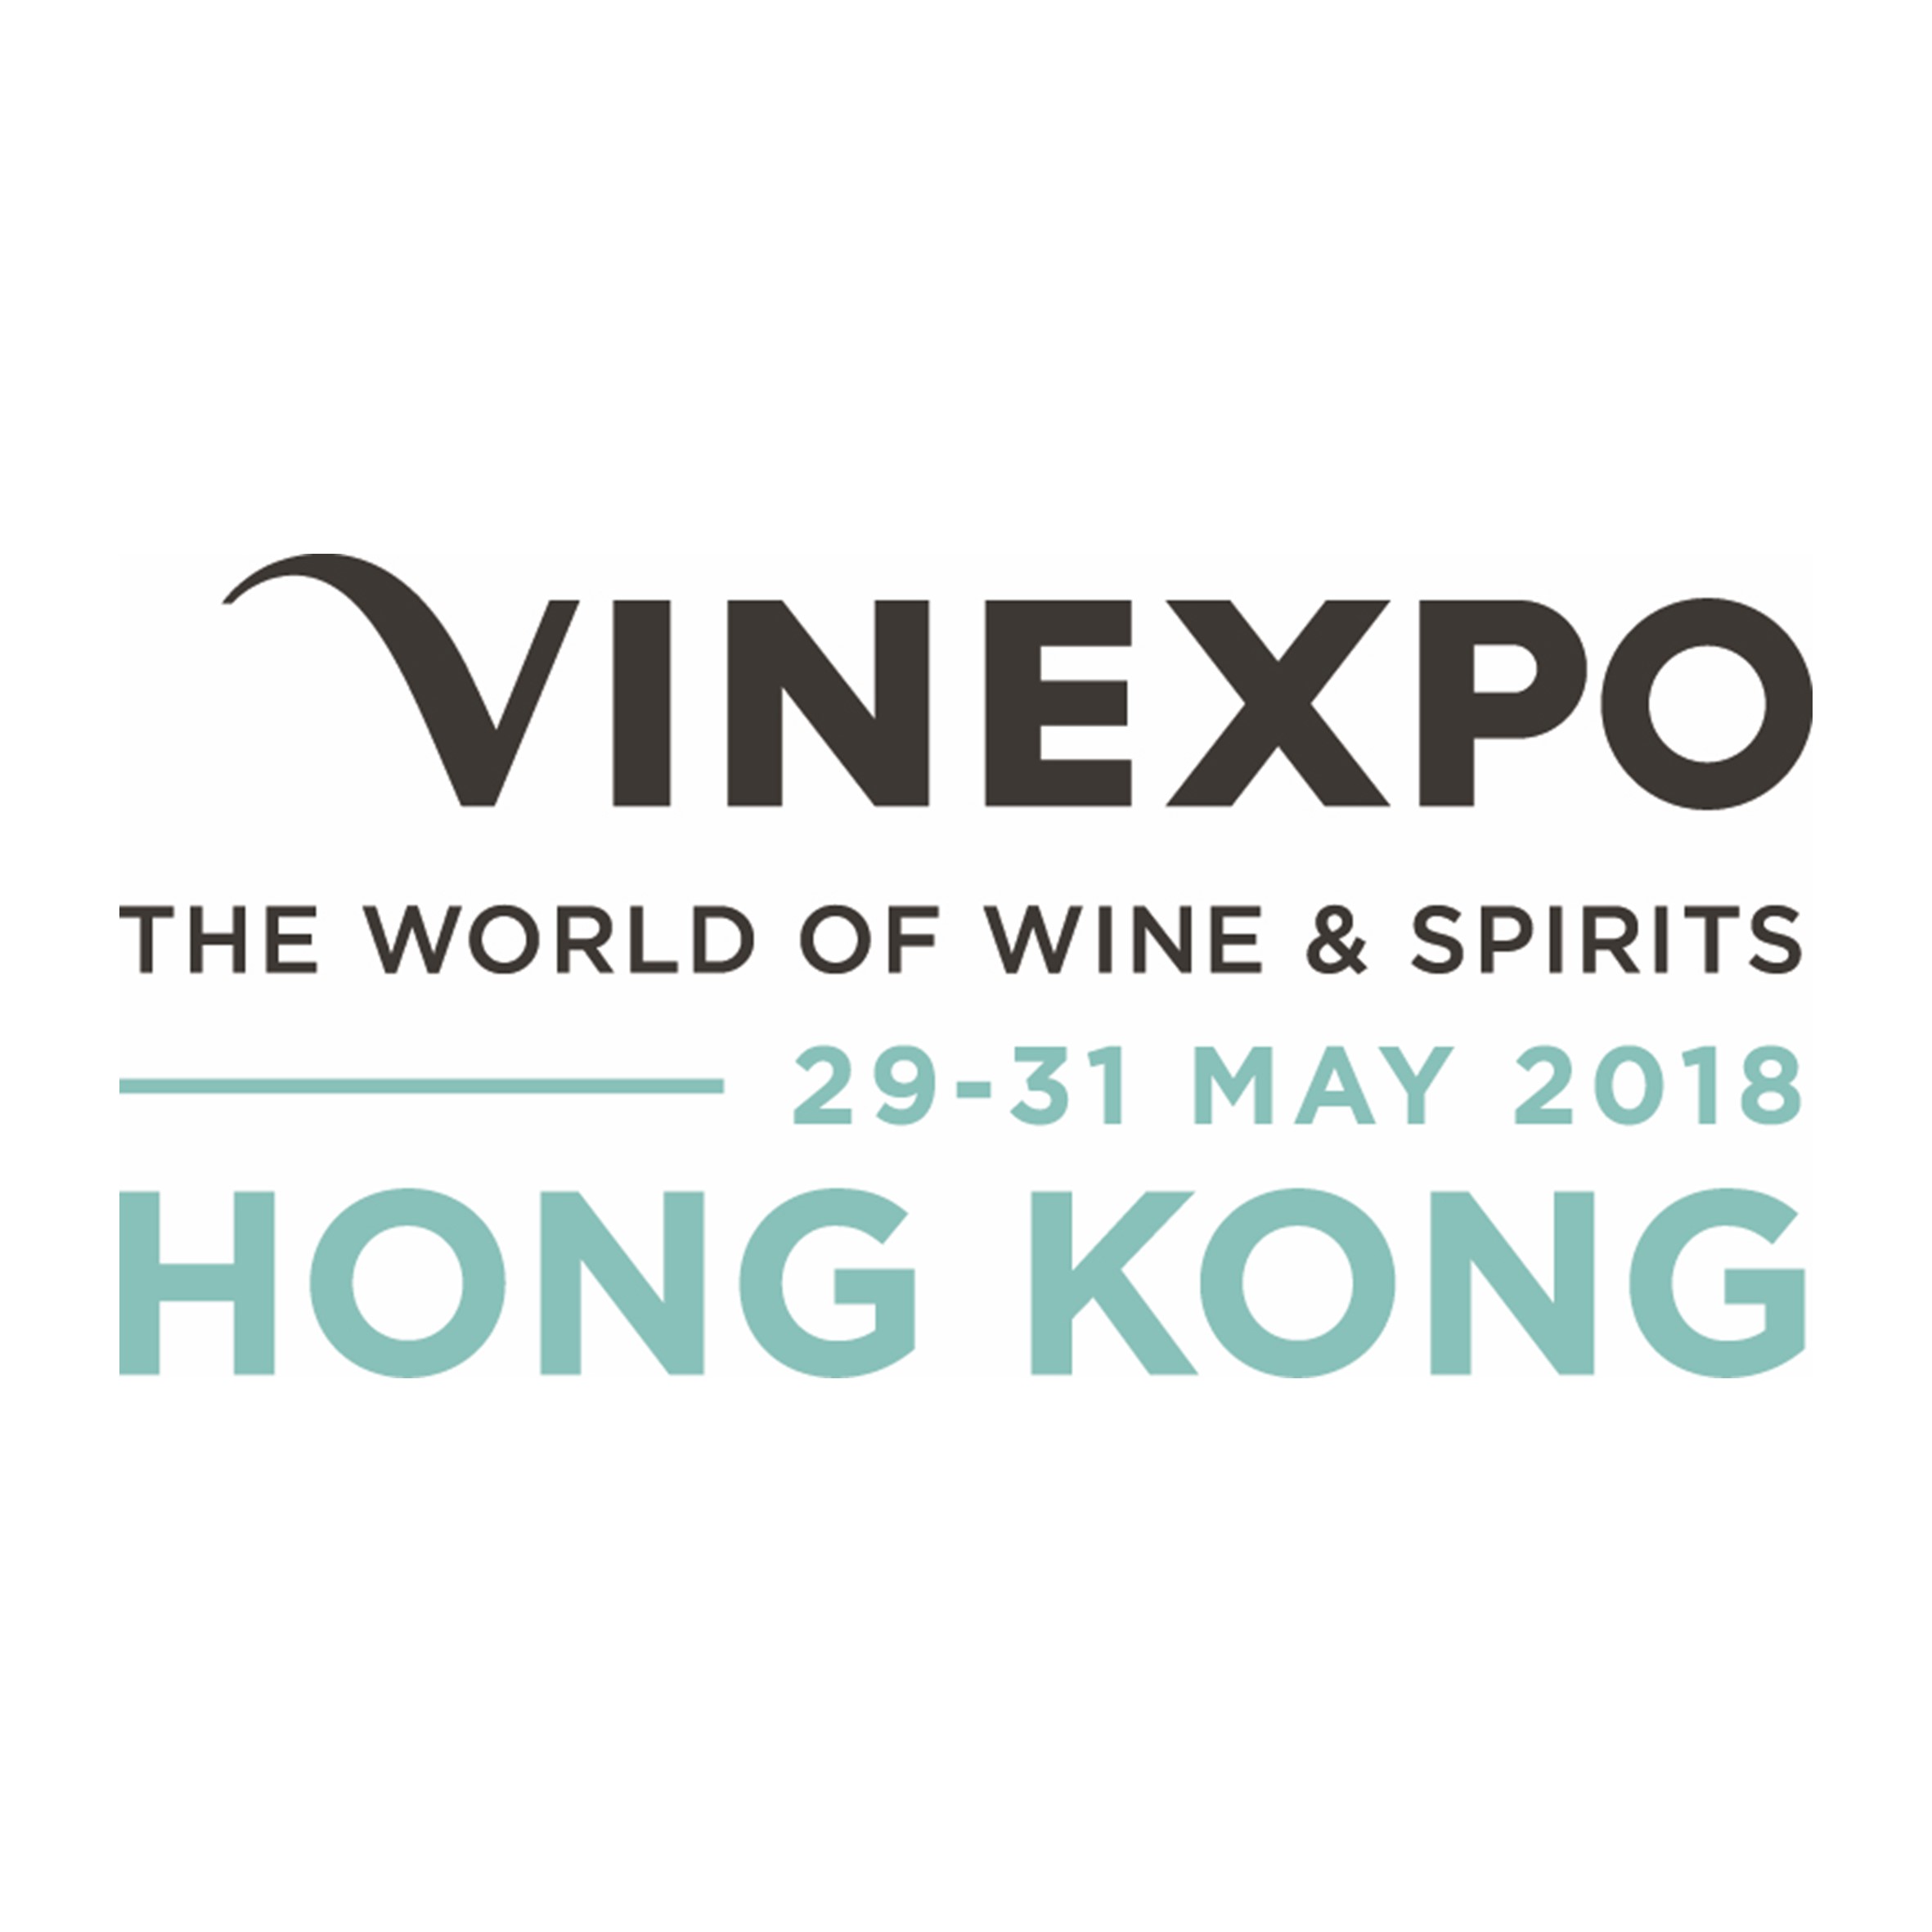 Vinexpo Hong Kong Logo 2018 - Global Trends Video #2: Retail